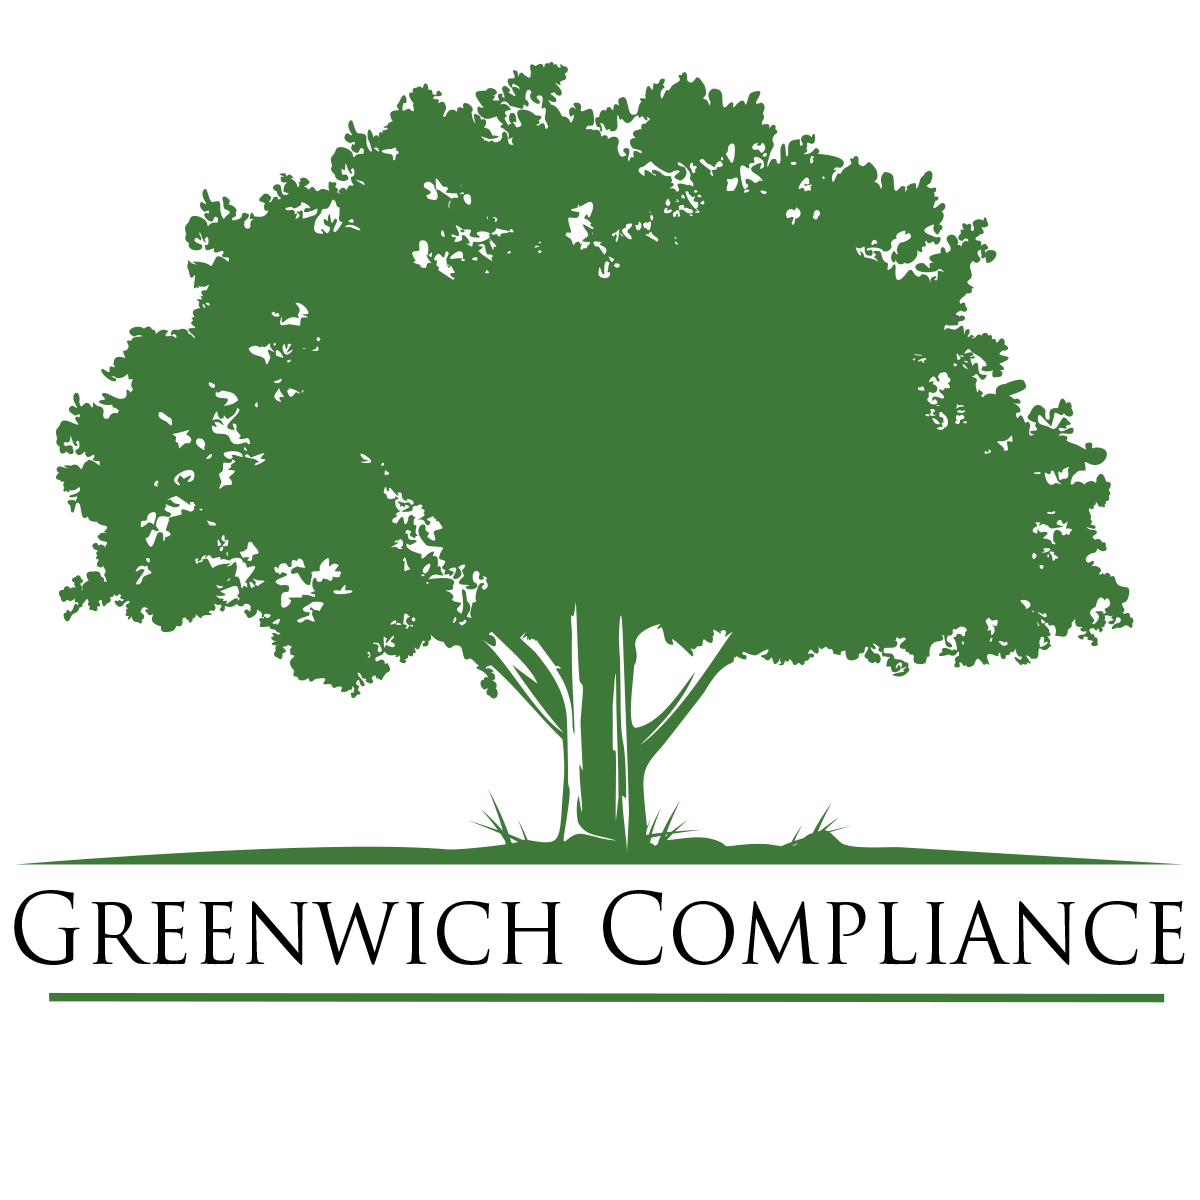 Greenwich Compliance